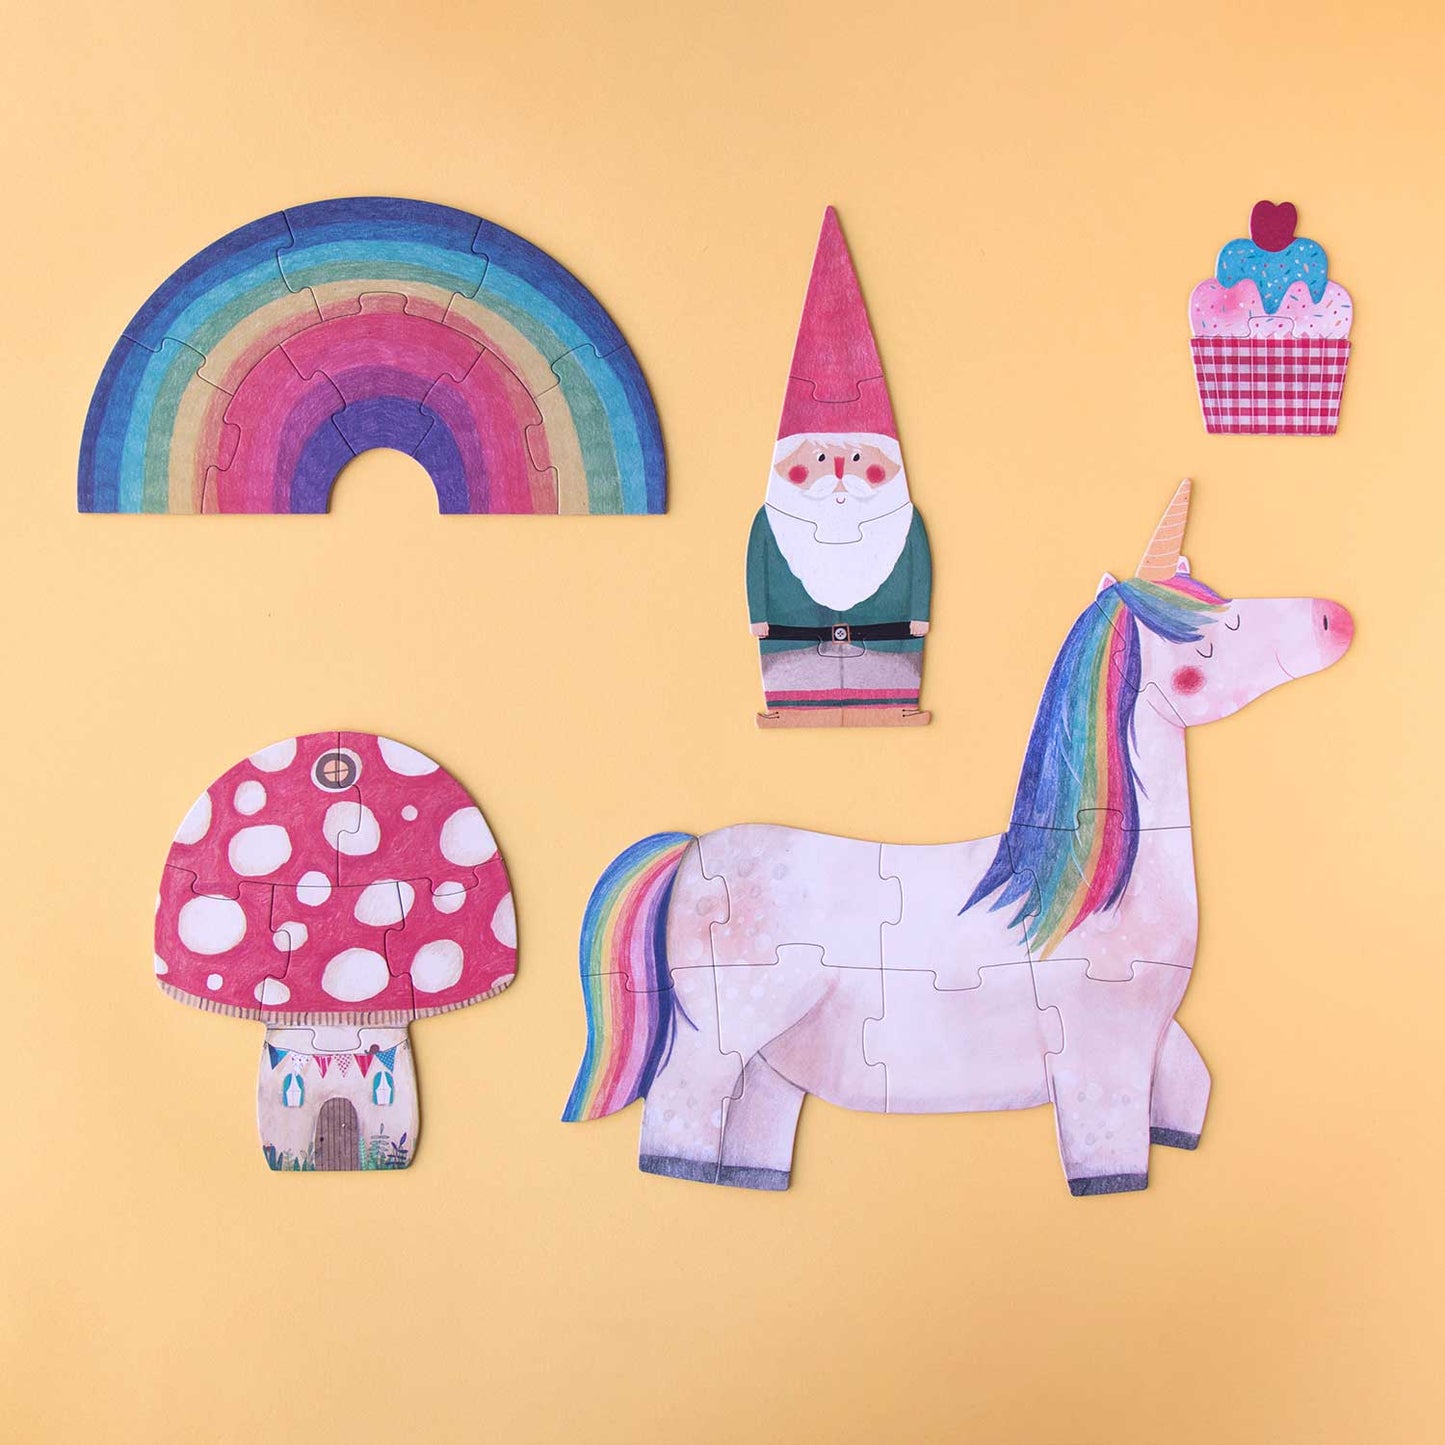 Londji Progressive Puzzles - Happy Birthday Unicorn!